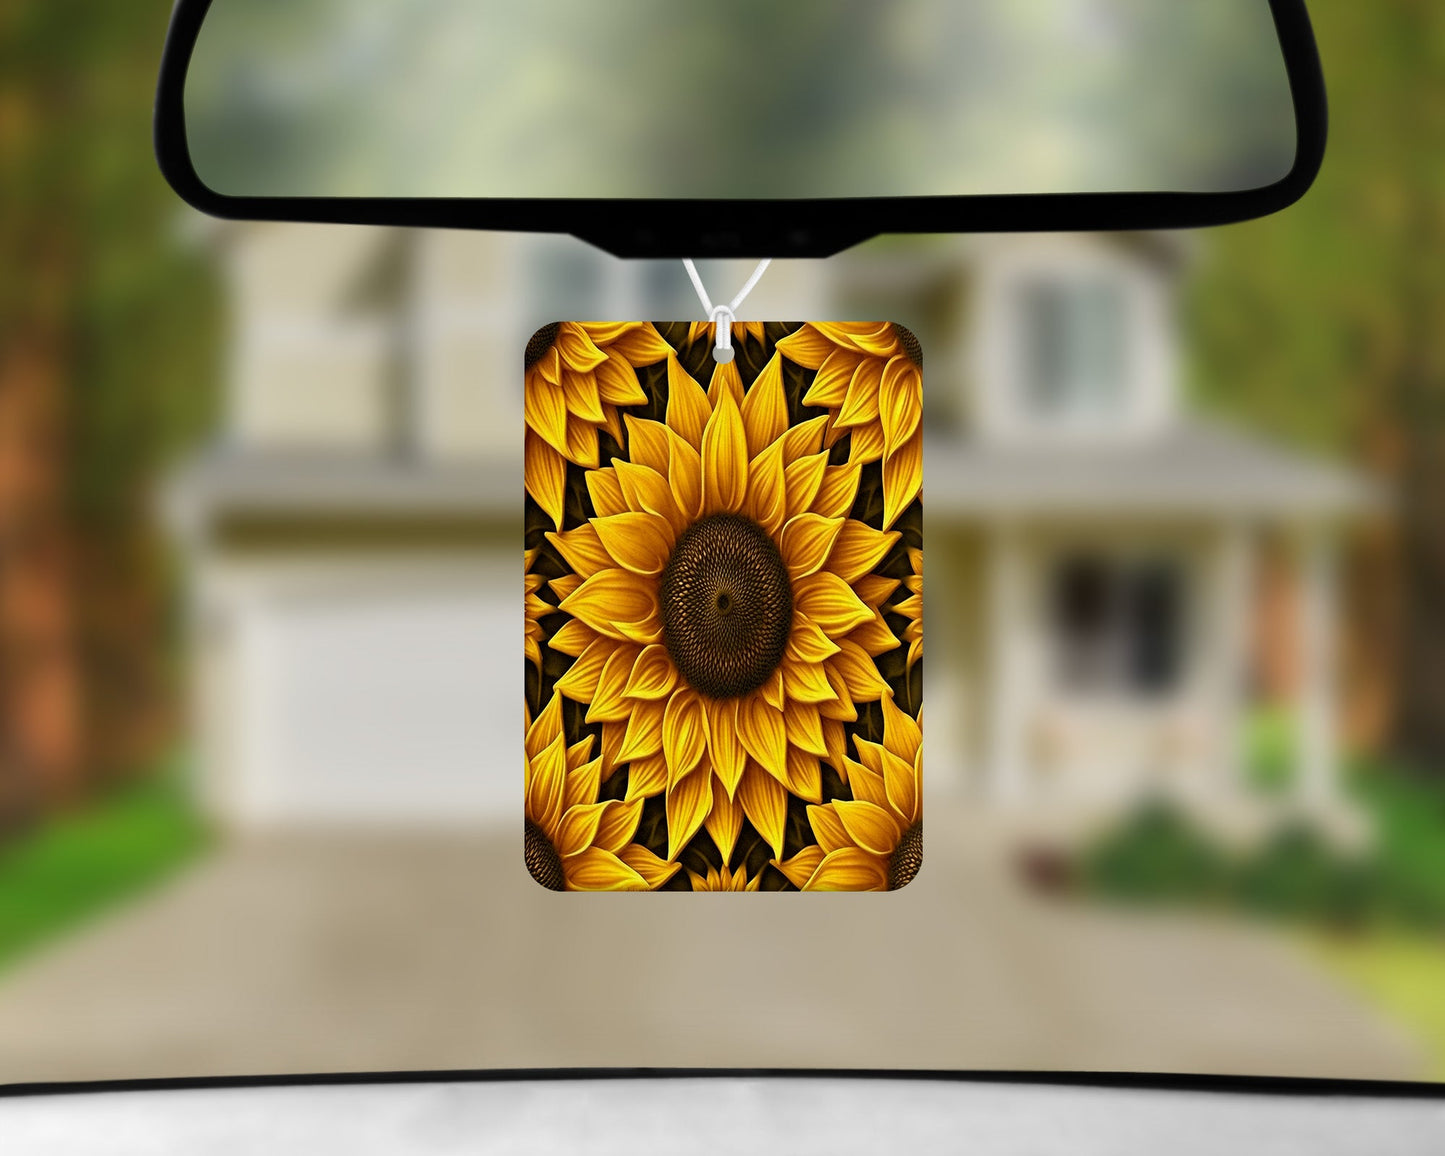 Sunflower|Freshie|Includes Scent Bottle - Vehicle Air Freshener